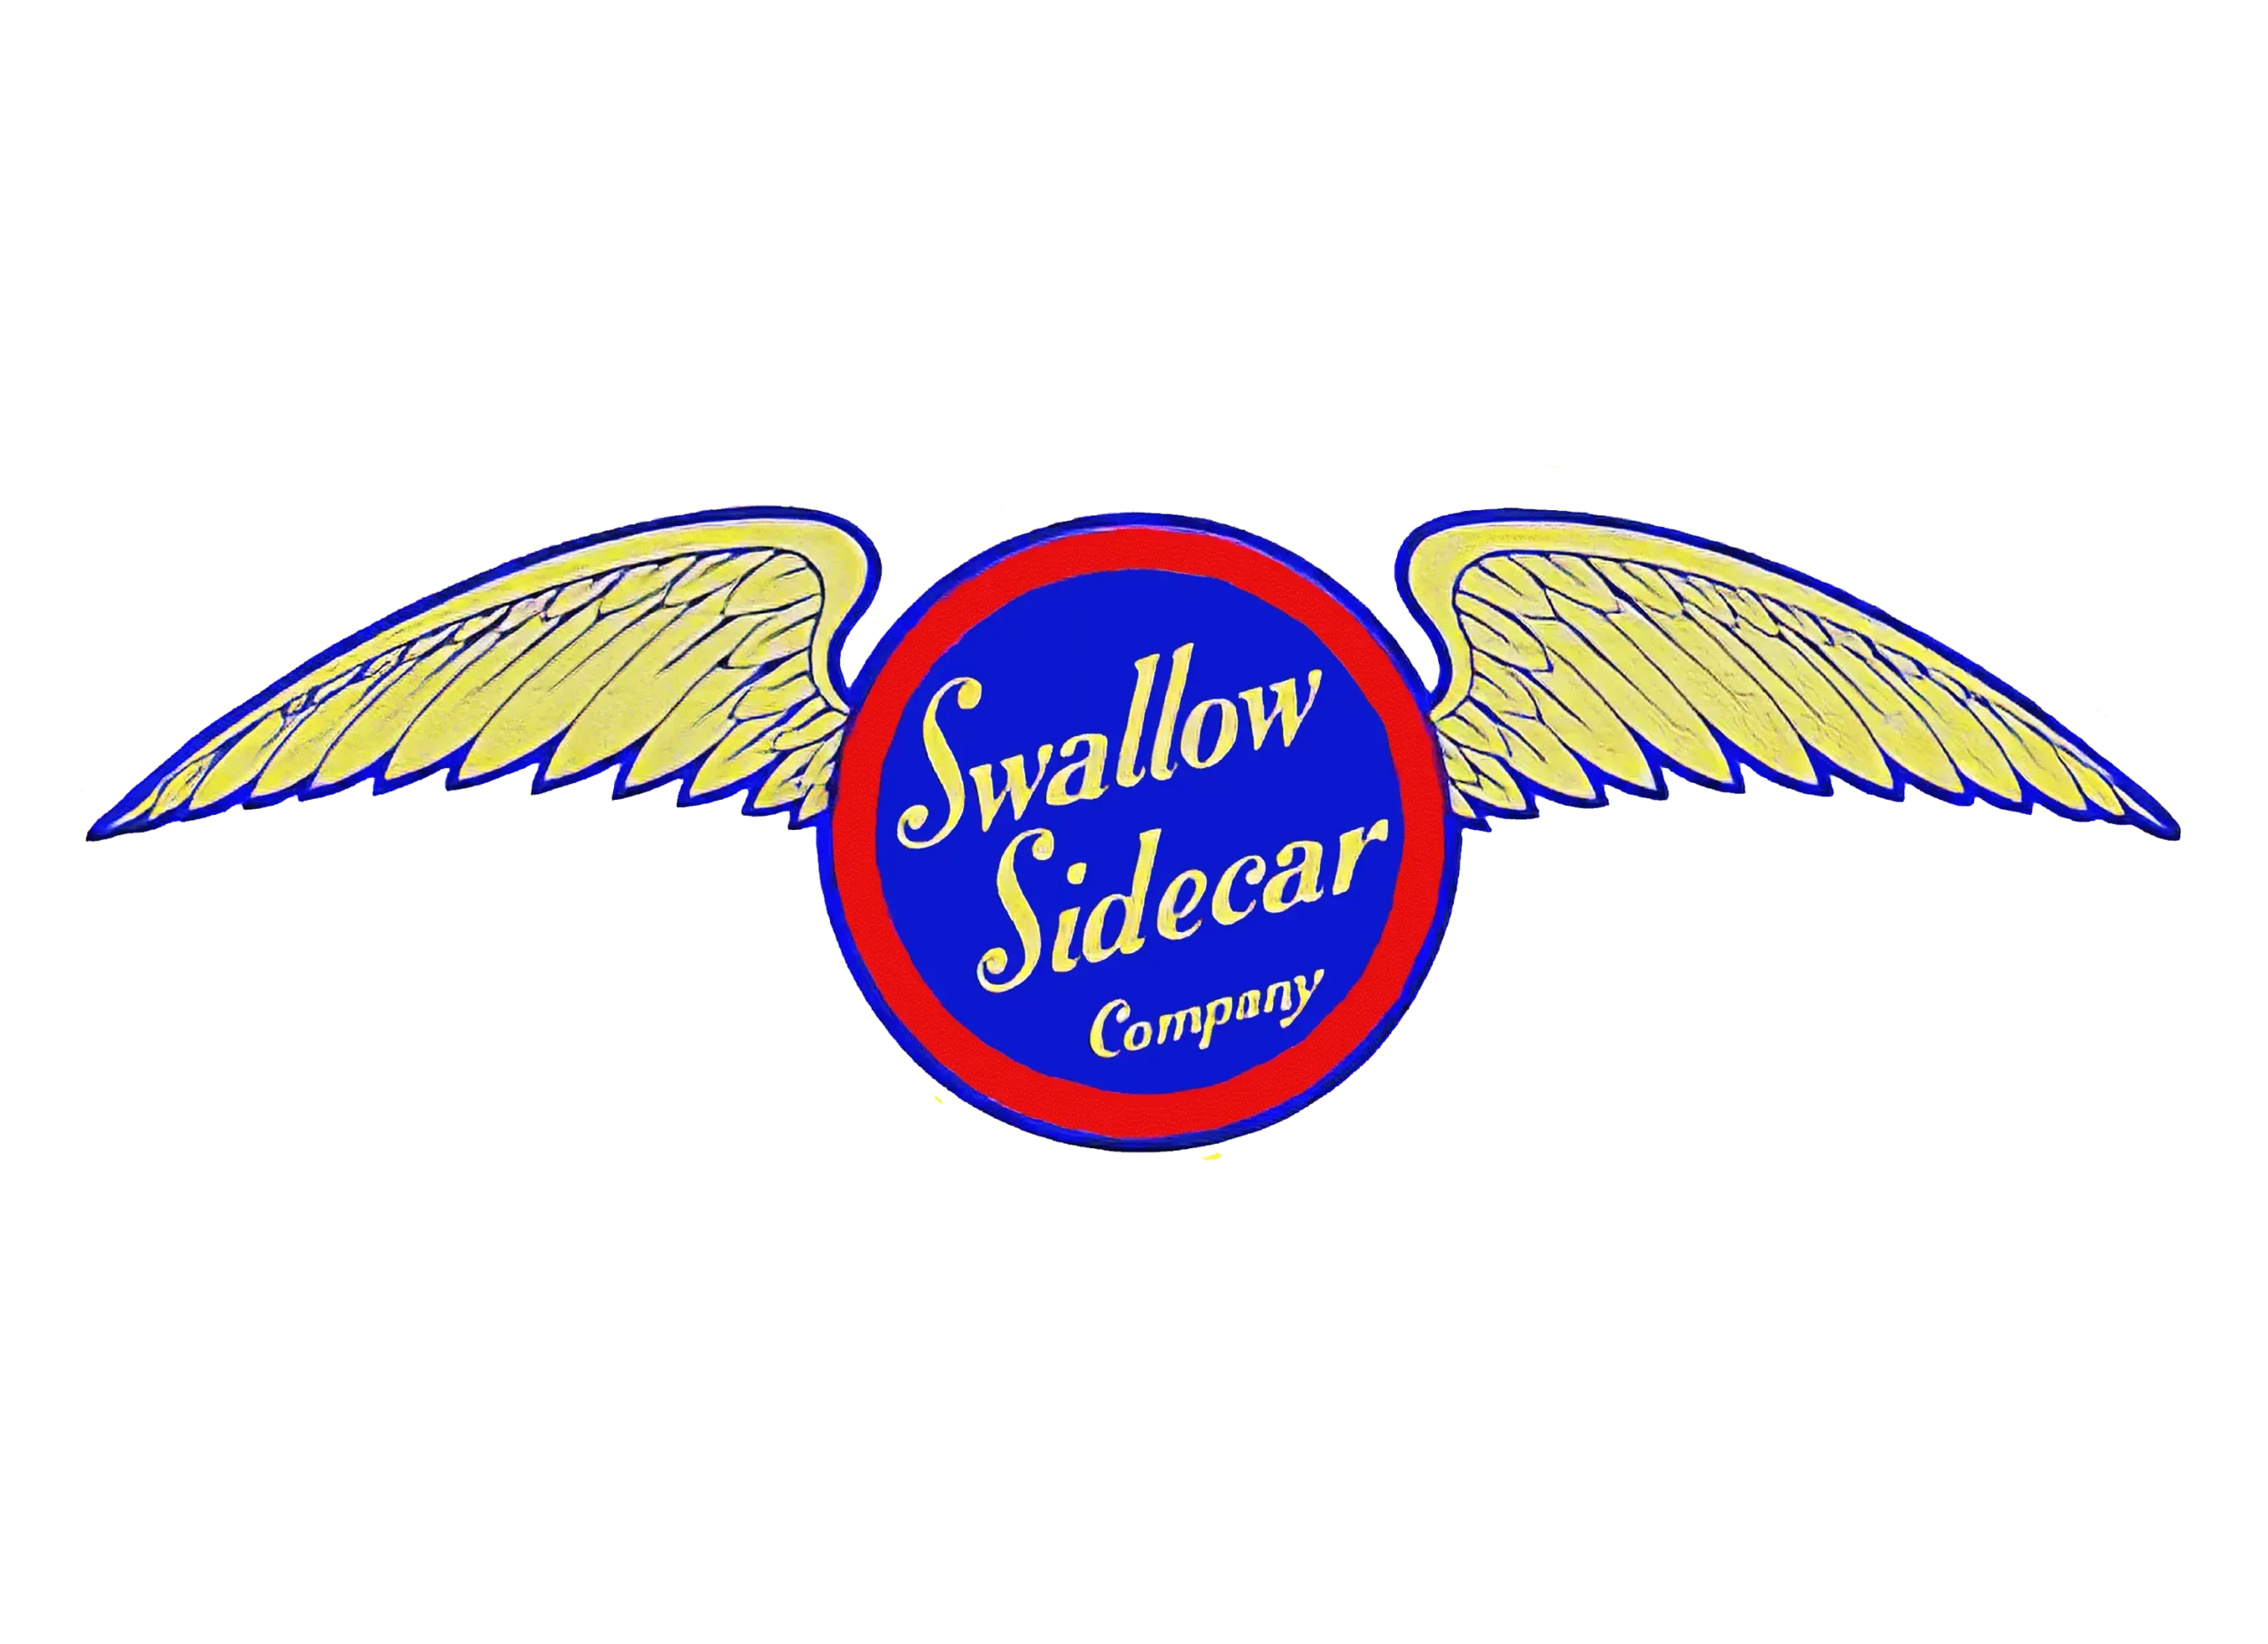 Swallow Sidecar logo 1922-1945